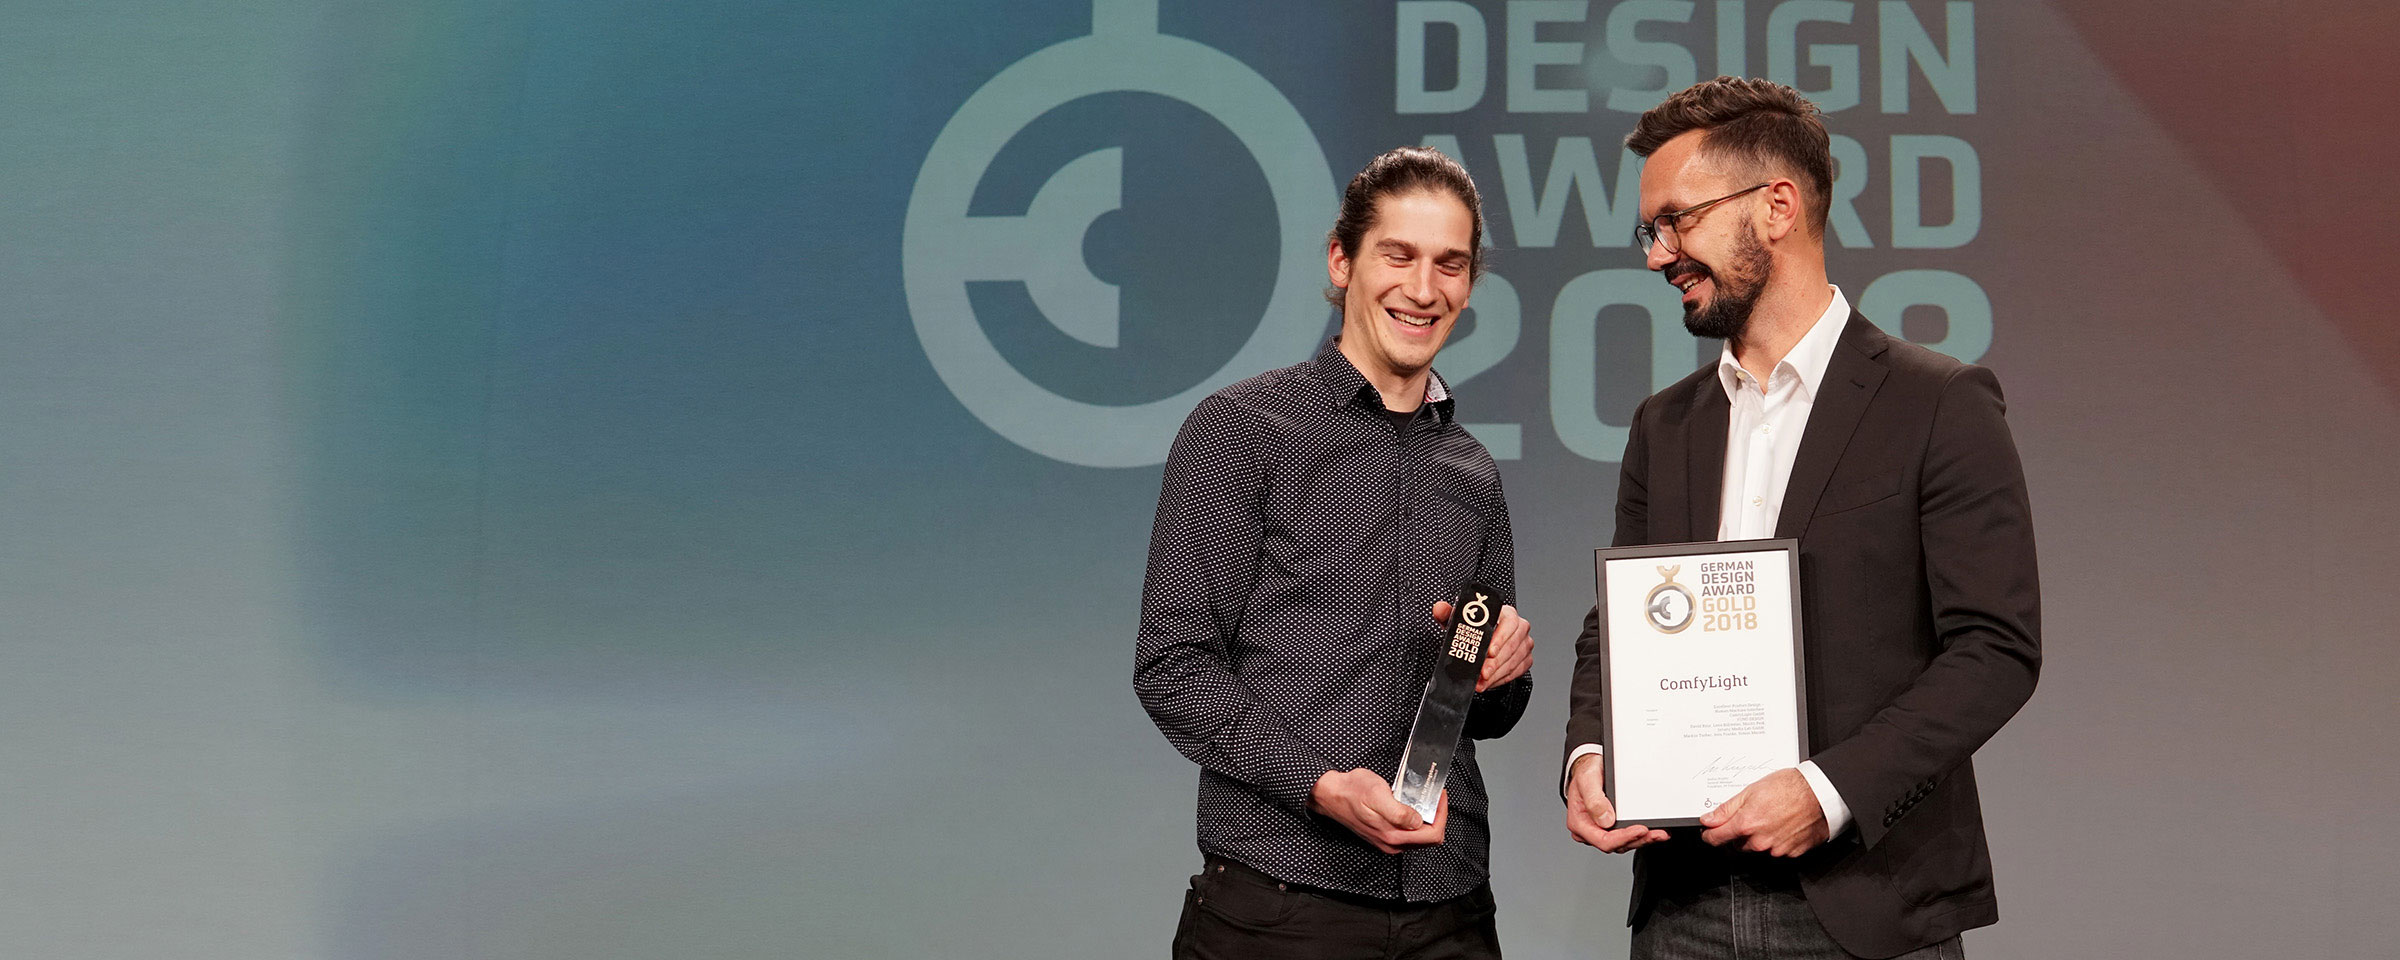 Intuity Media Lab wins the German Design Award 2018 Gold